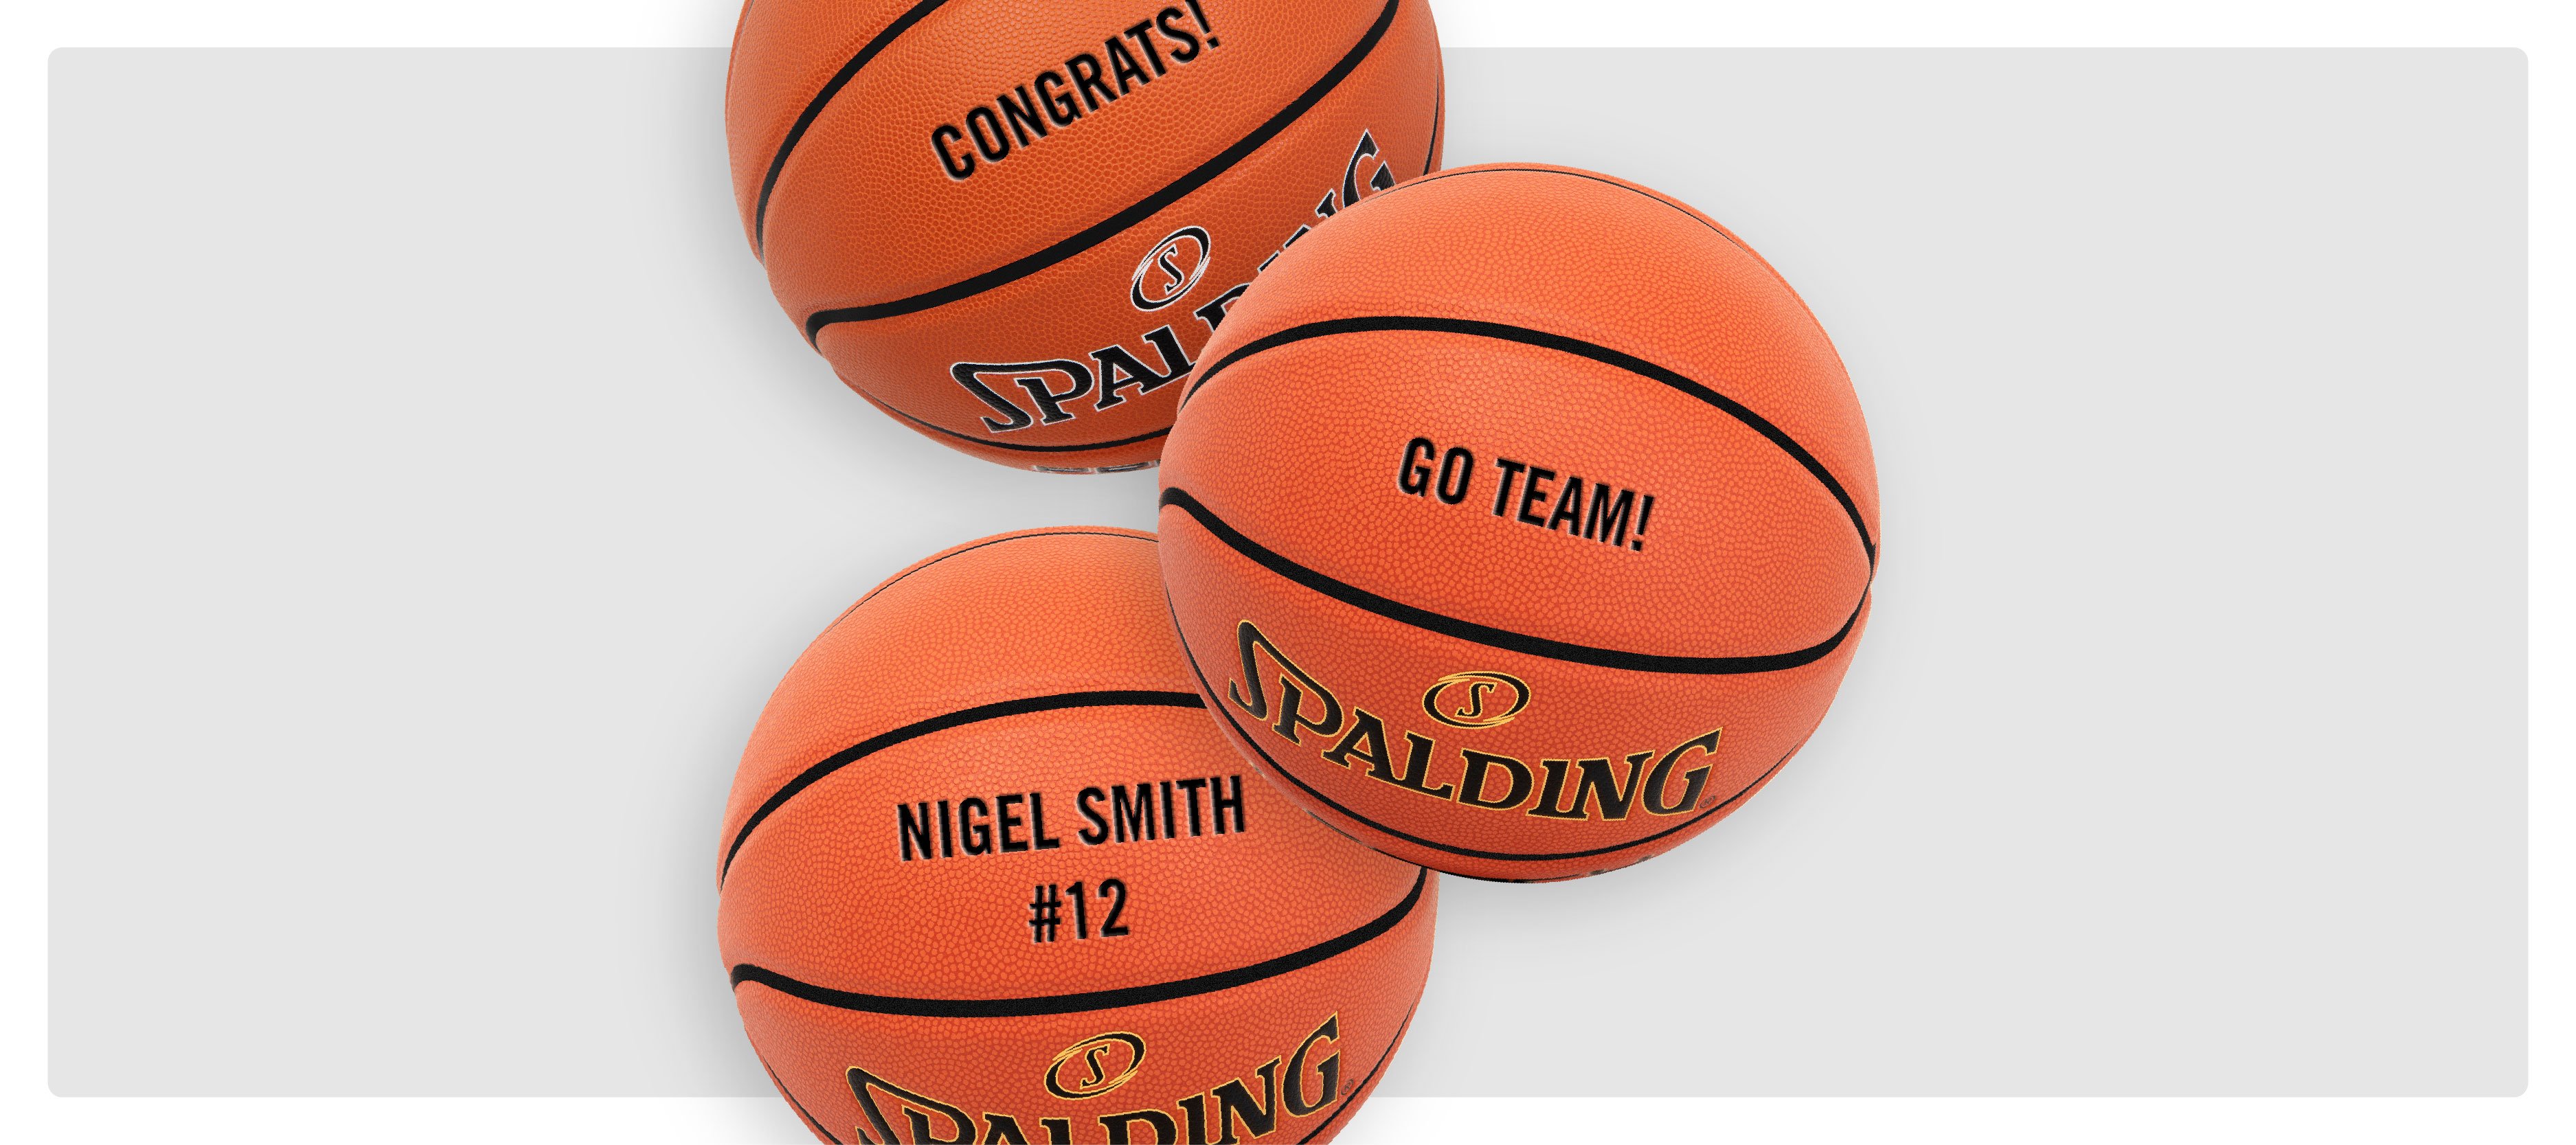  Orange Spalding basketballs with custom text examples. Go Team! Nigel Smith #12 Congrats!